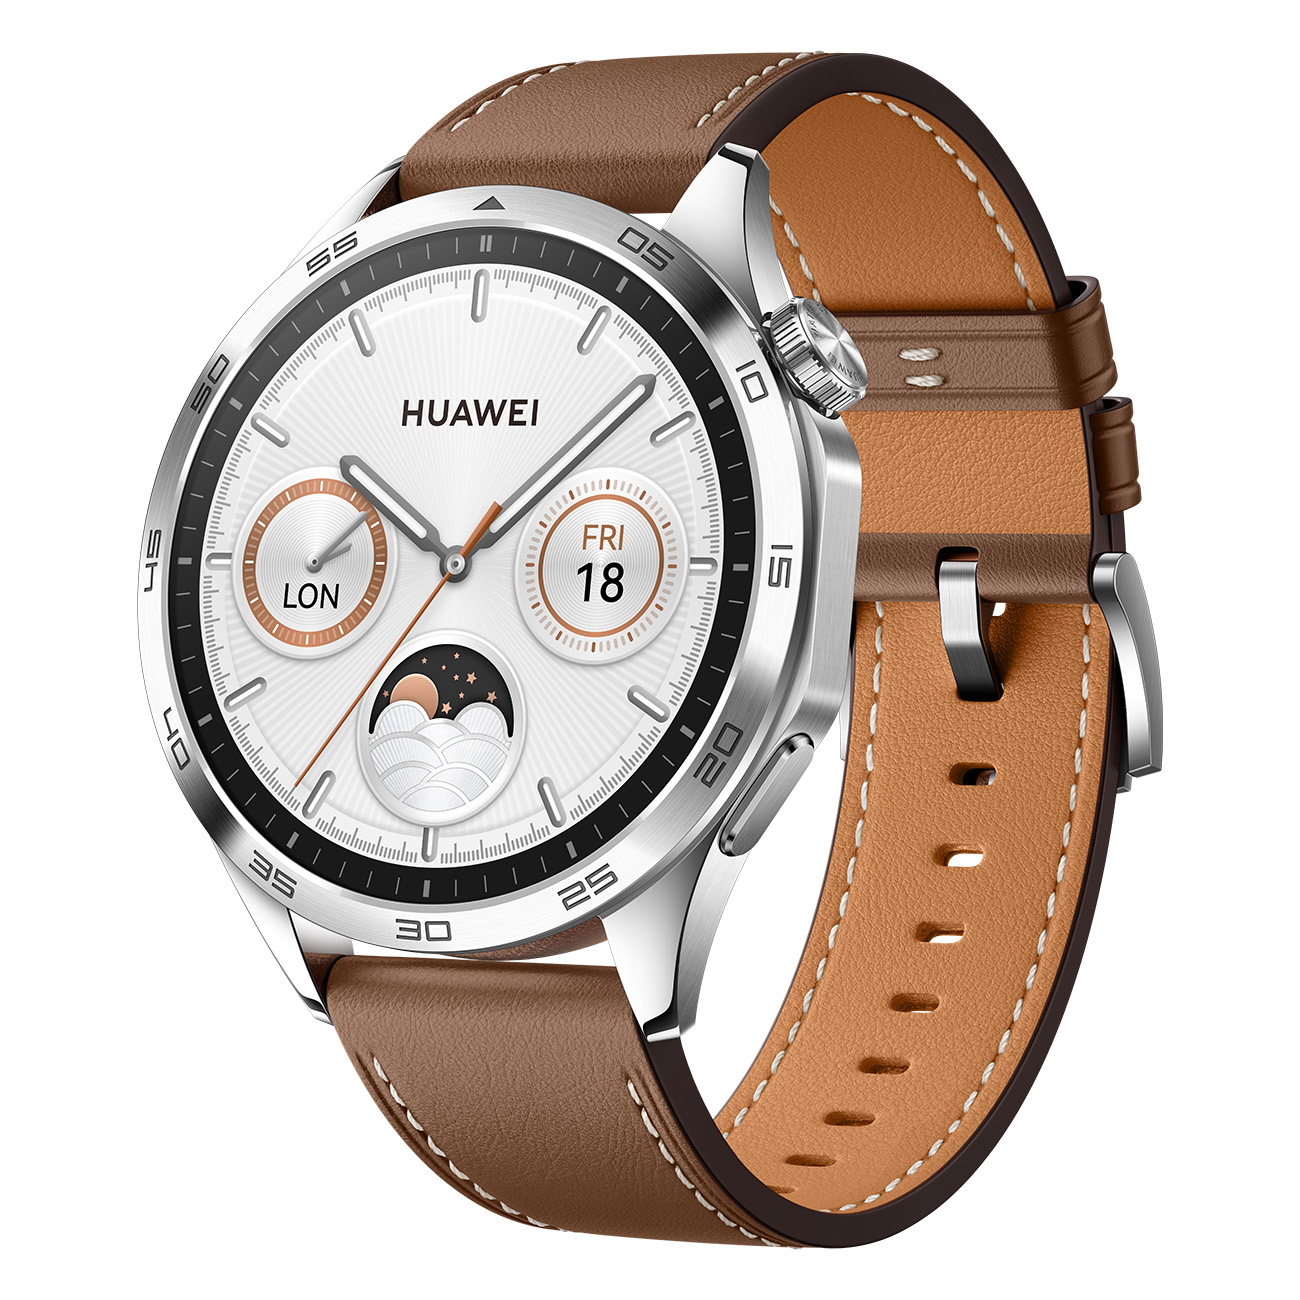 Watch GT4 HUAWEI Smartwatch braun Leder,